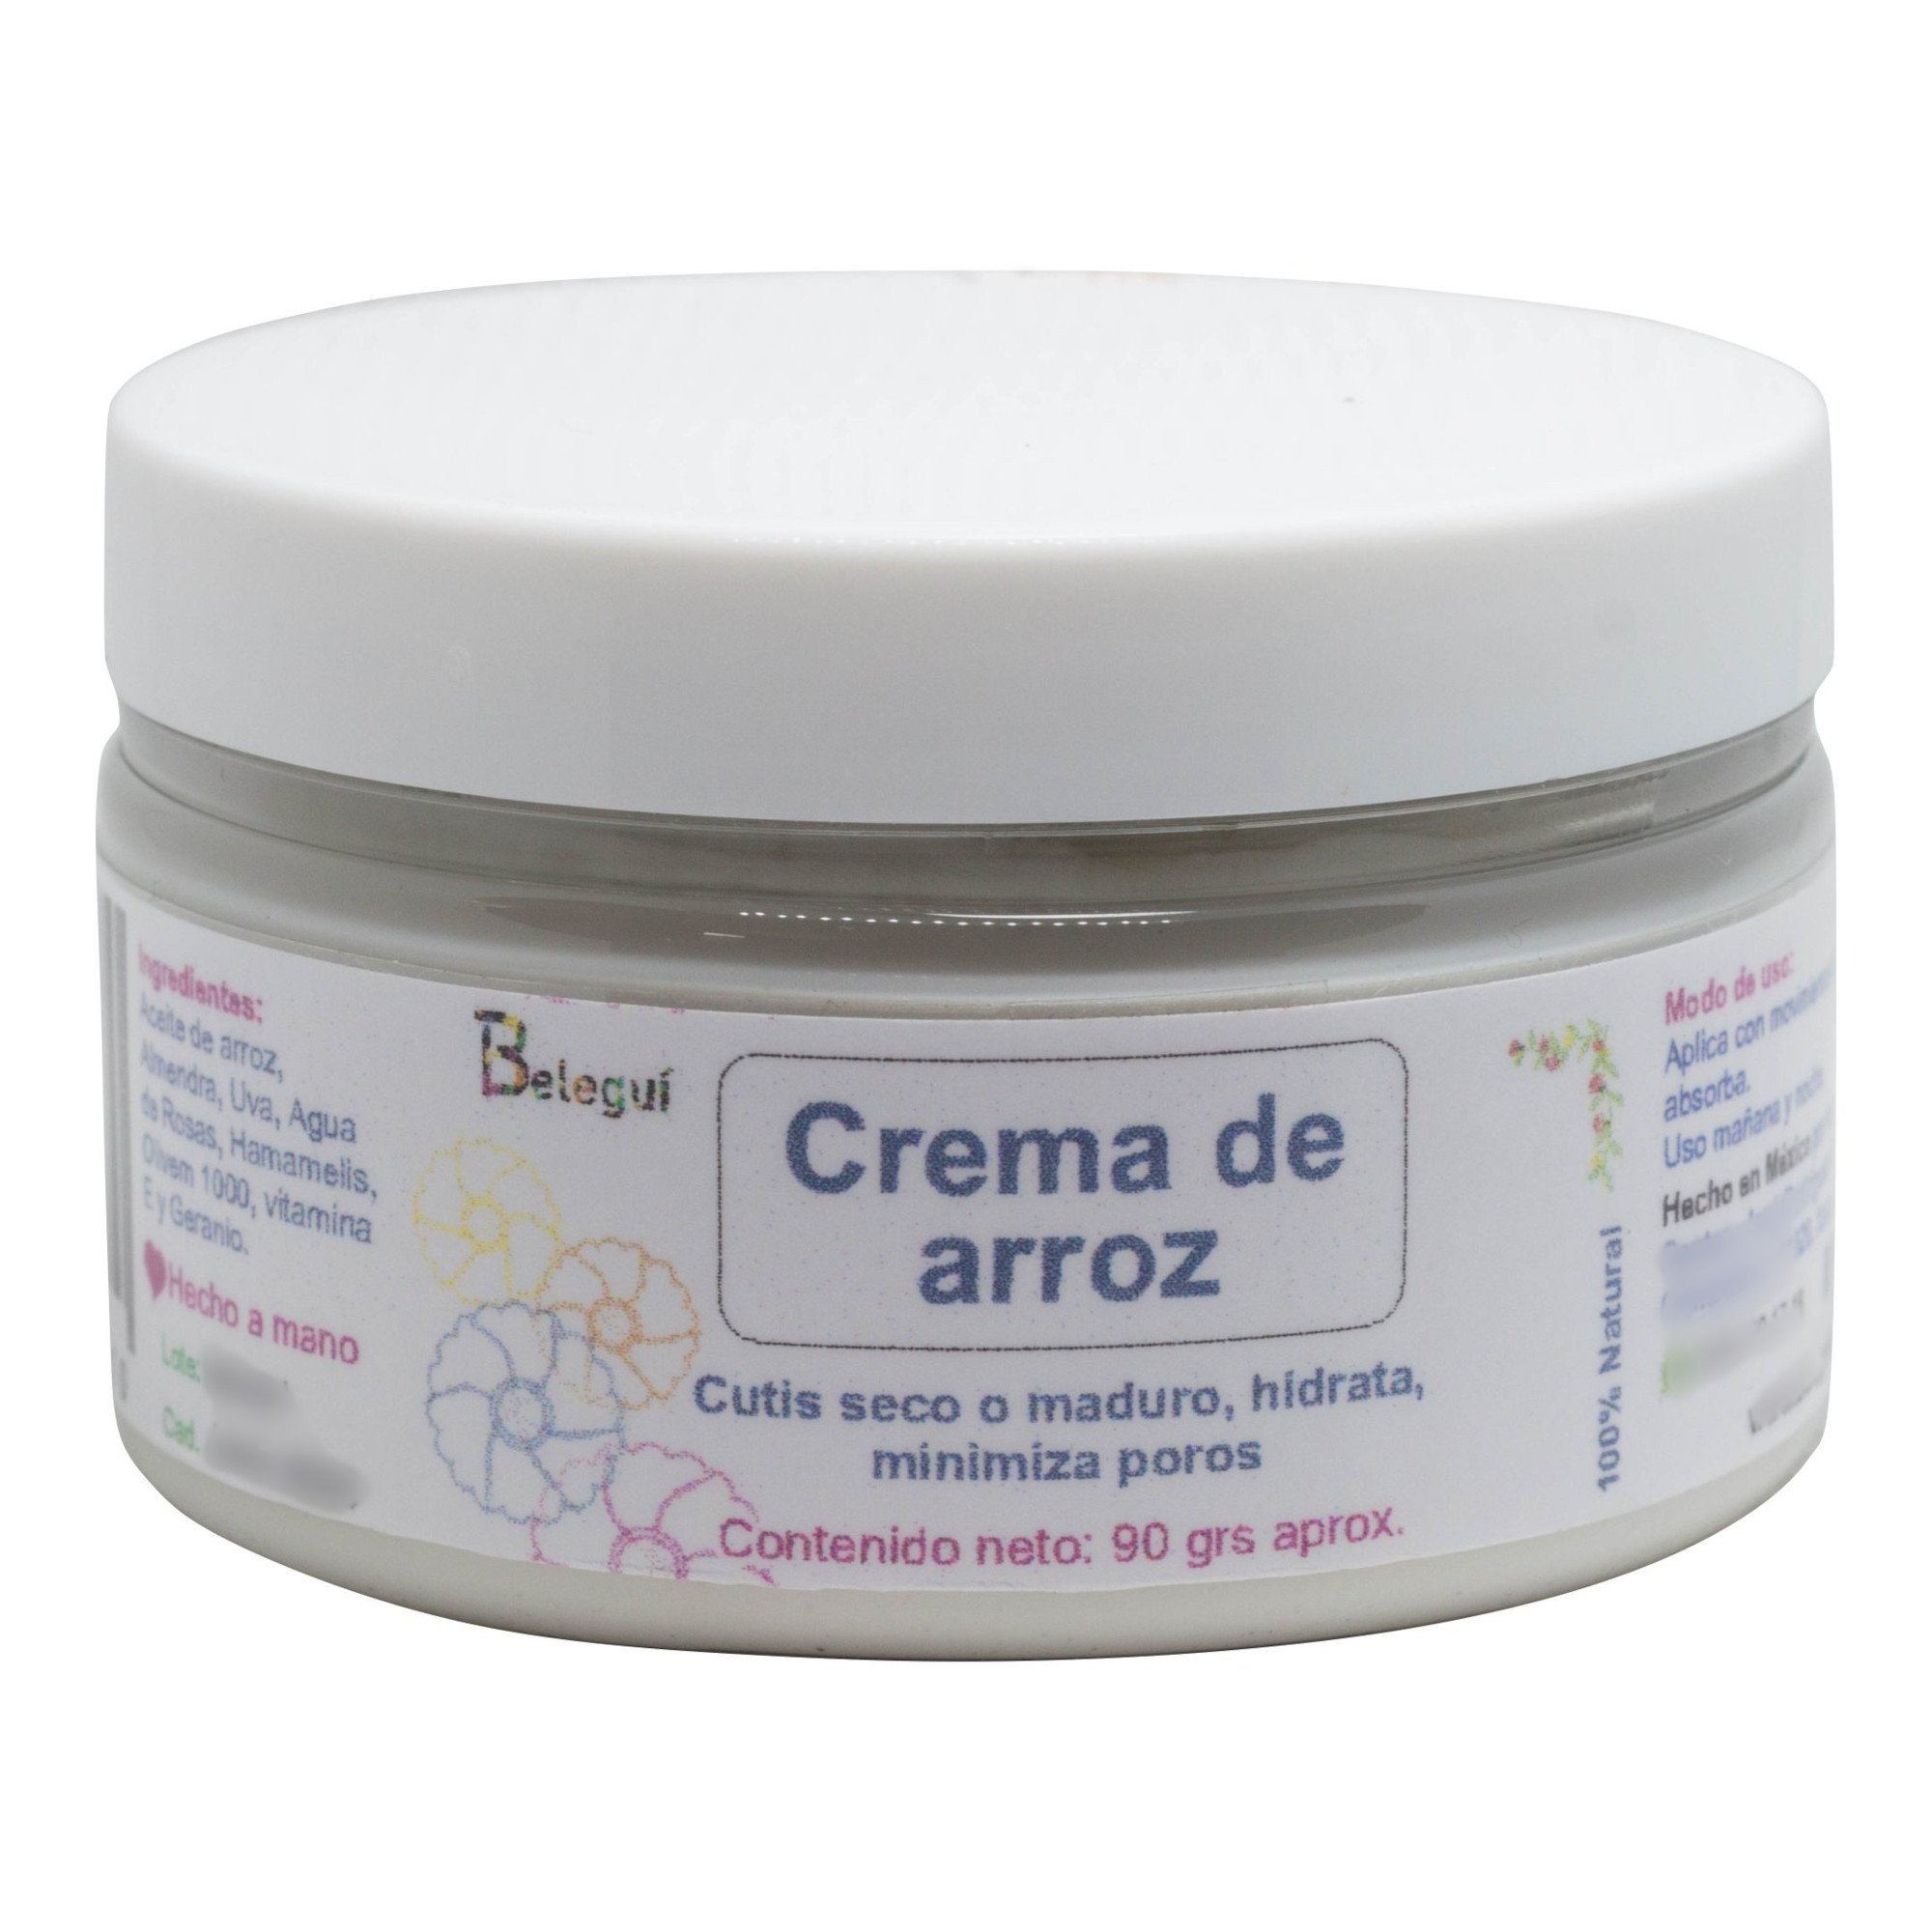 Crema de Arroz Beleguí, 90 grs. Ideal para el cutis seco o maduro